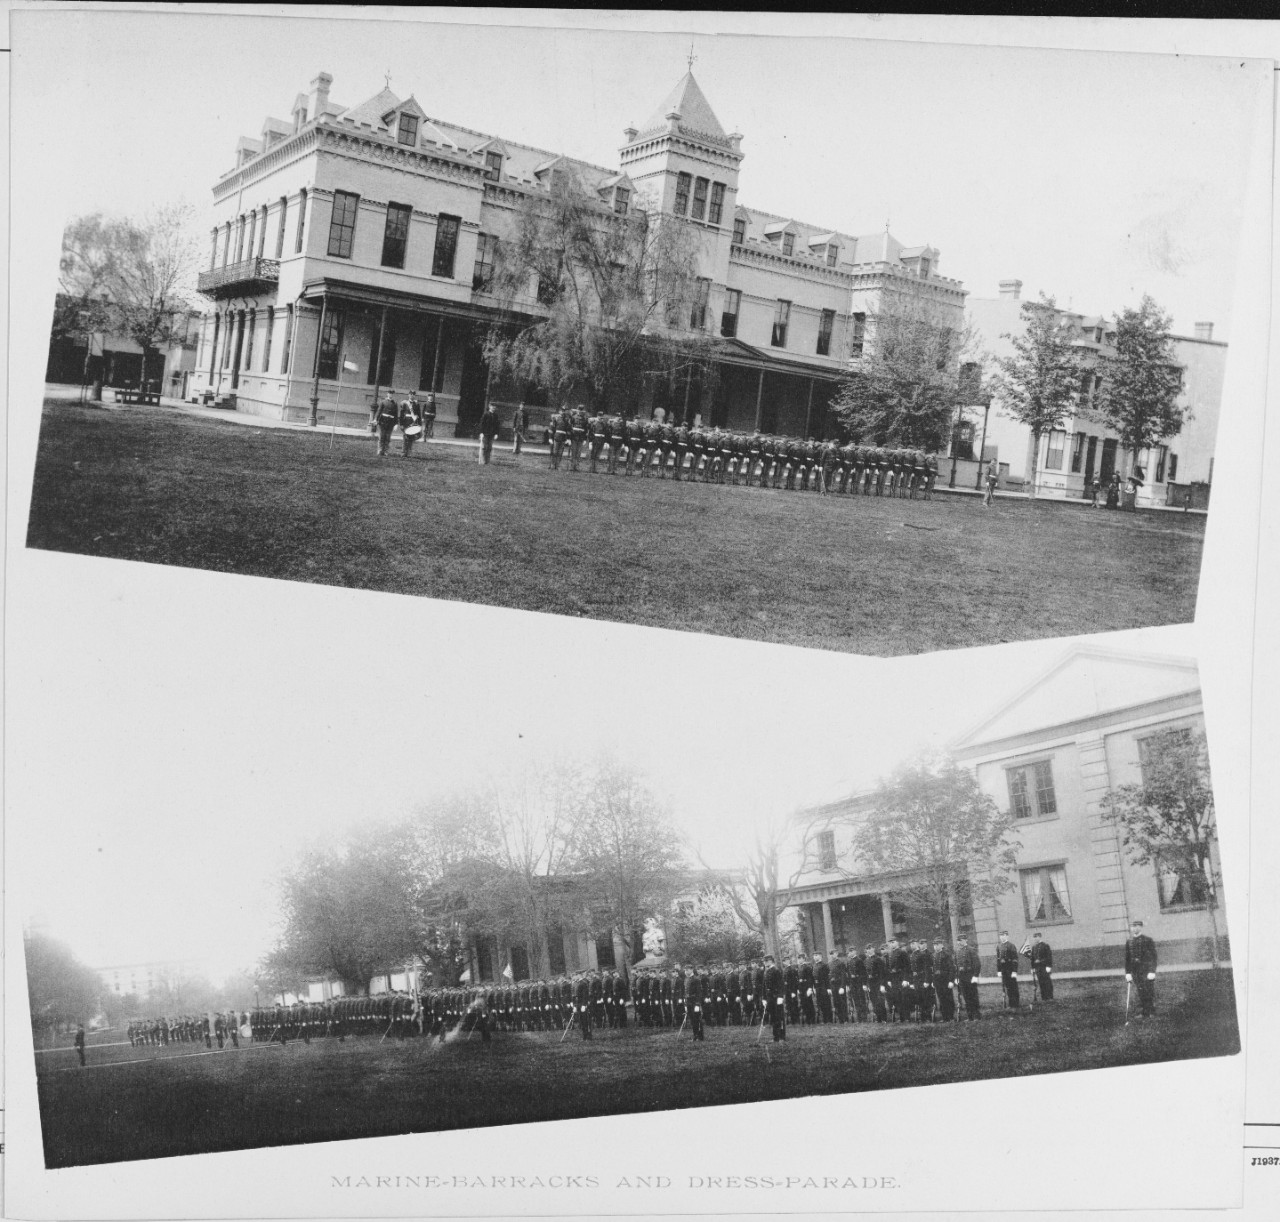 Naval Academy 1887. marine barracks and dregs parade